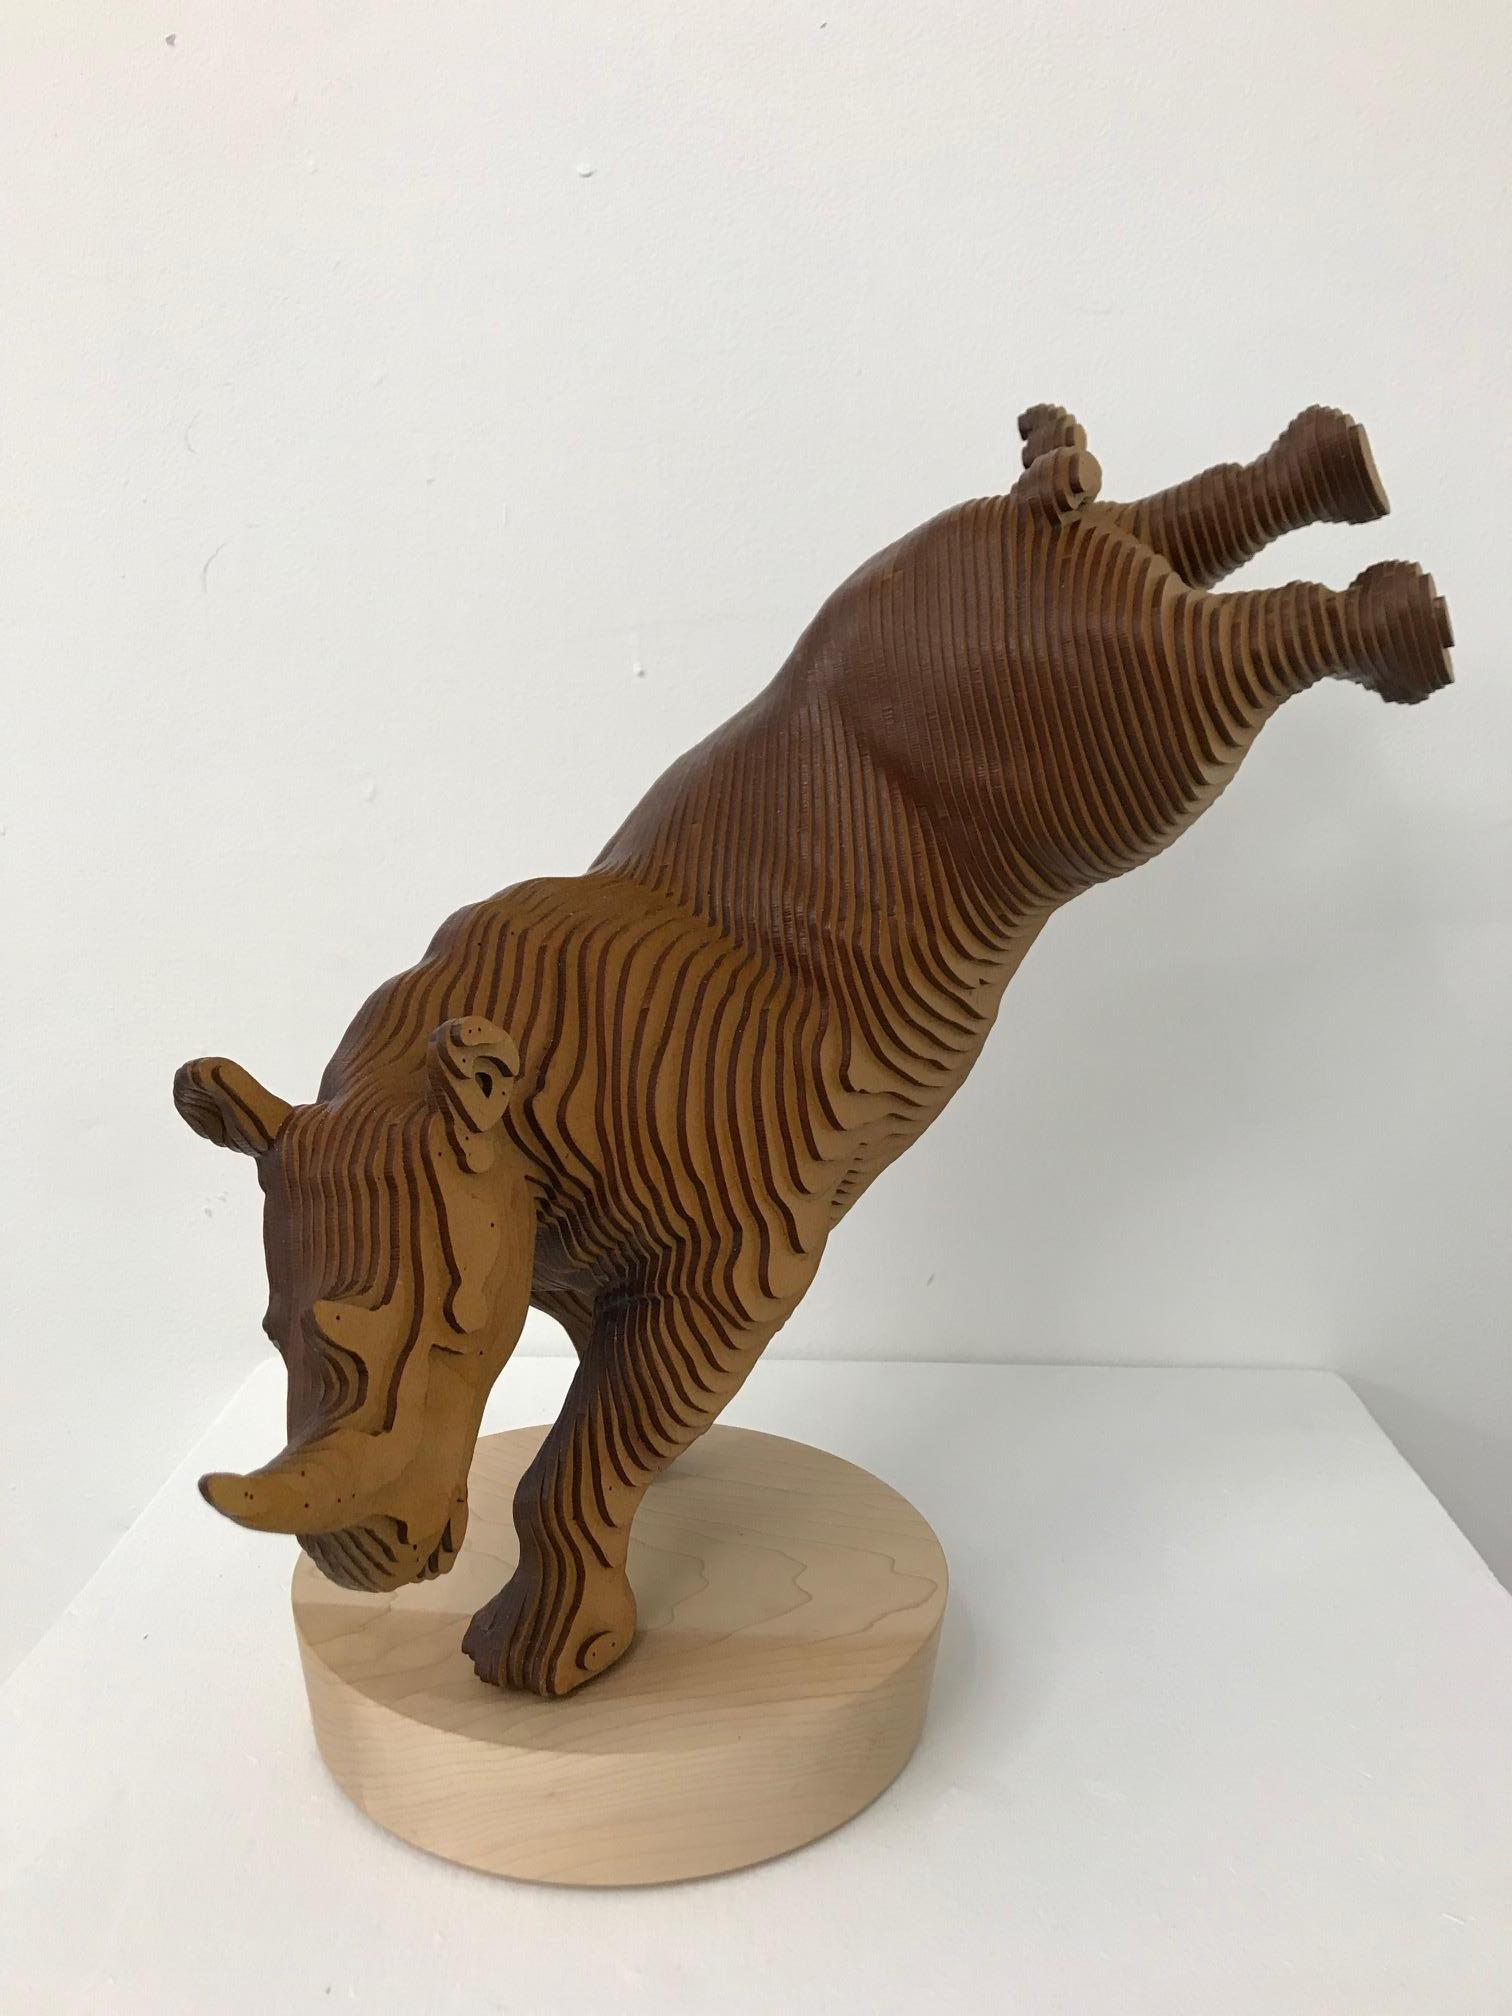 Olivier Duhamel Still-Life Sculpture - Ballerhino..Contemporary whimsical animal sculpture, wood slices, dancing rhino